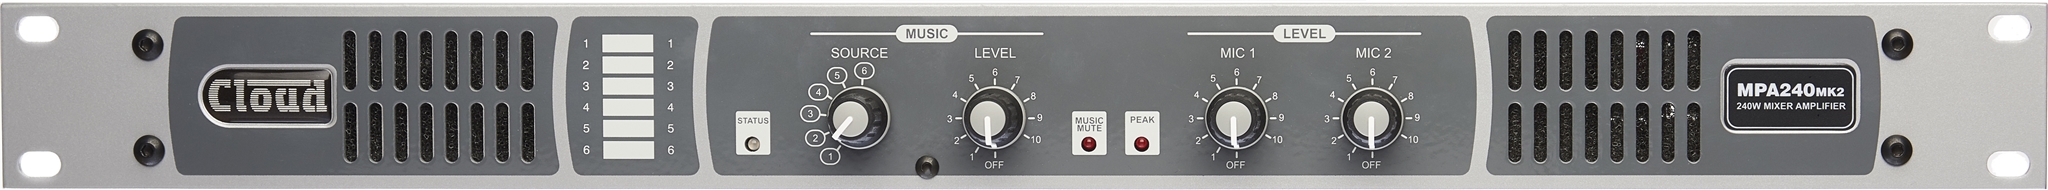 240W Integrated Mixer Amplifier - CLOUD (ENGLAND) _ MPA240MK2